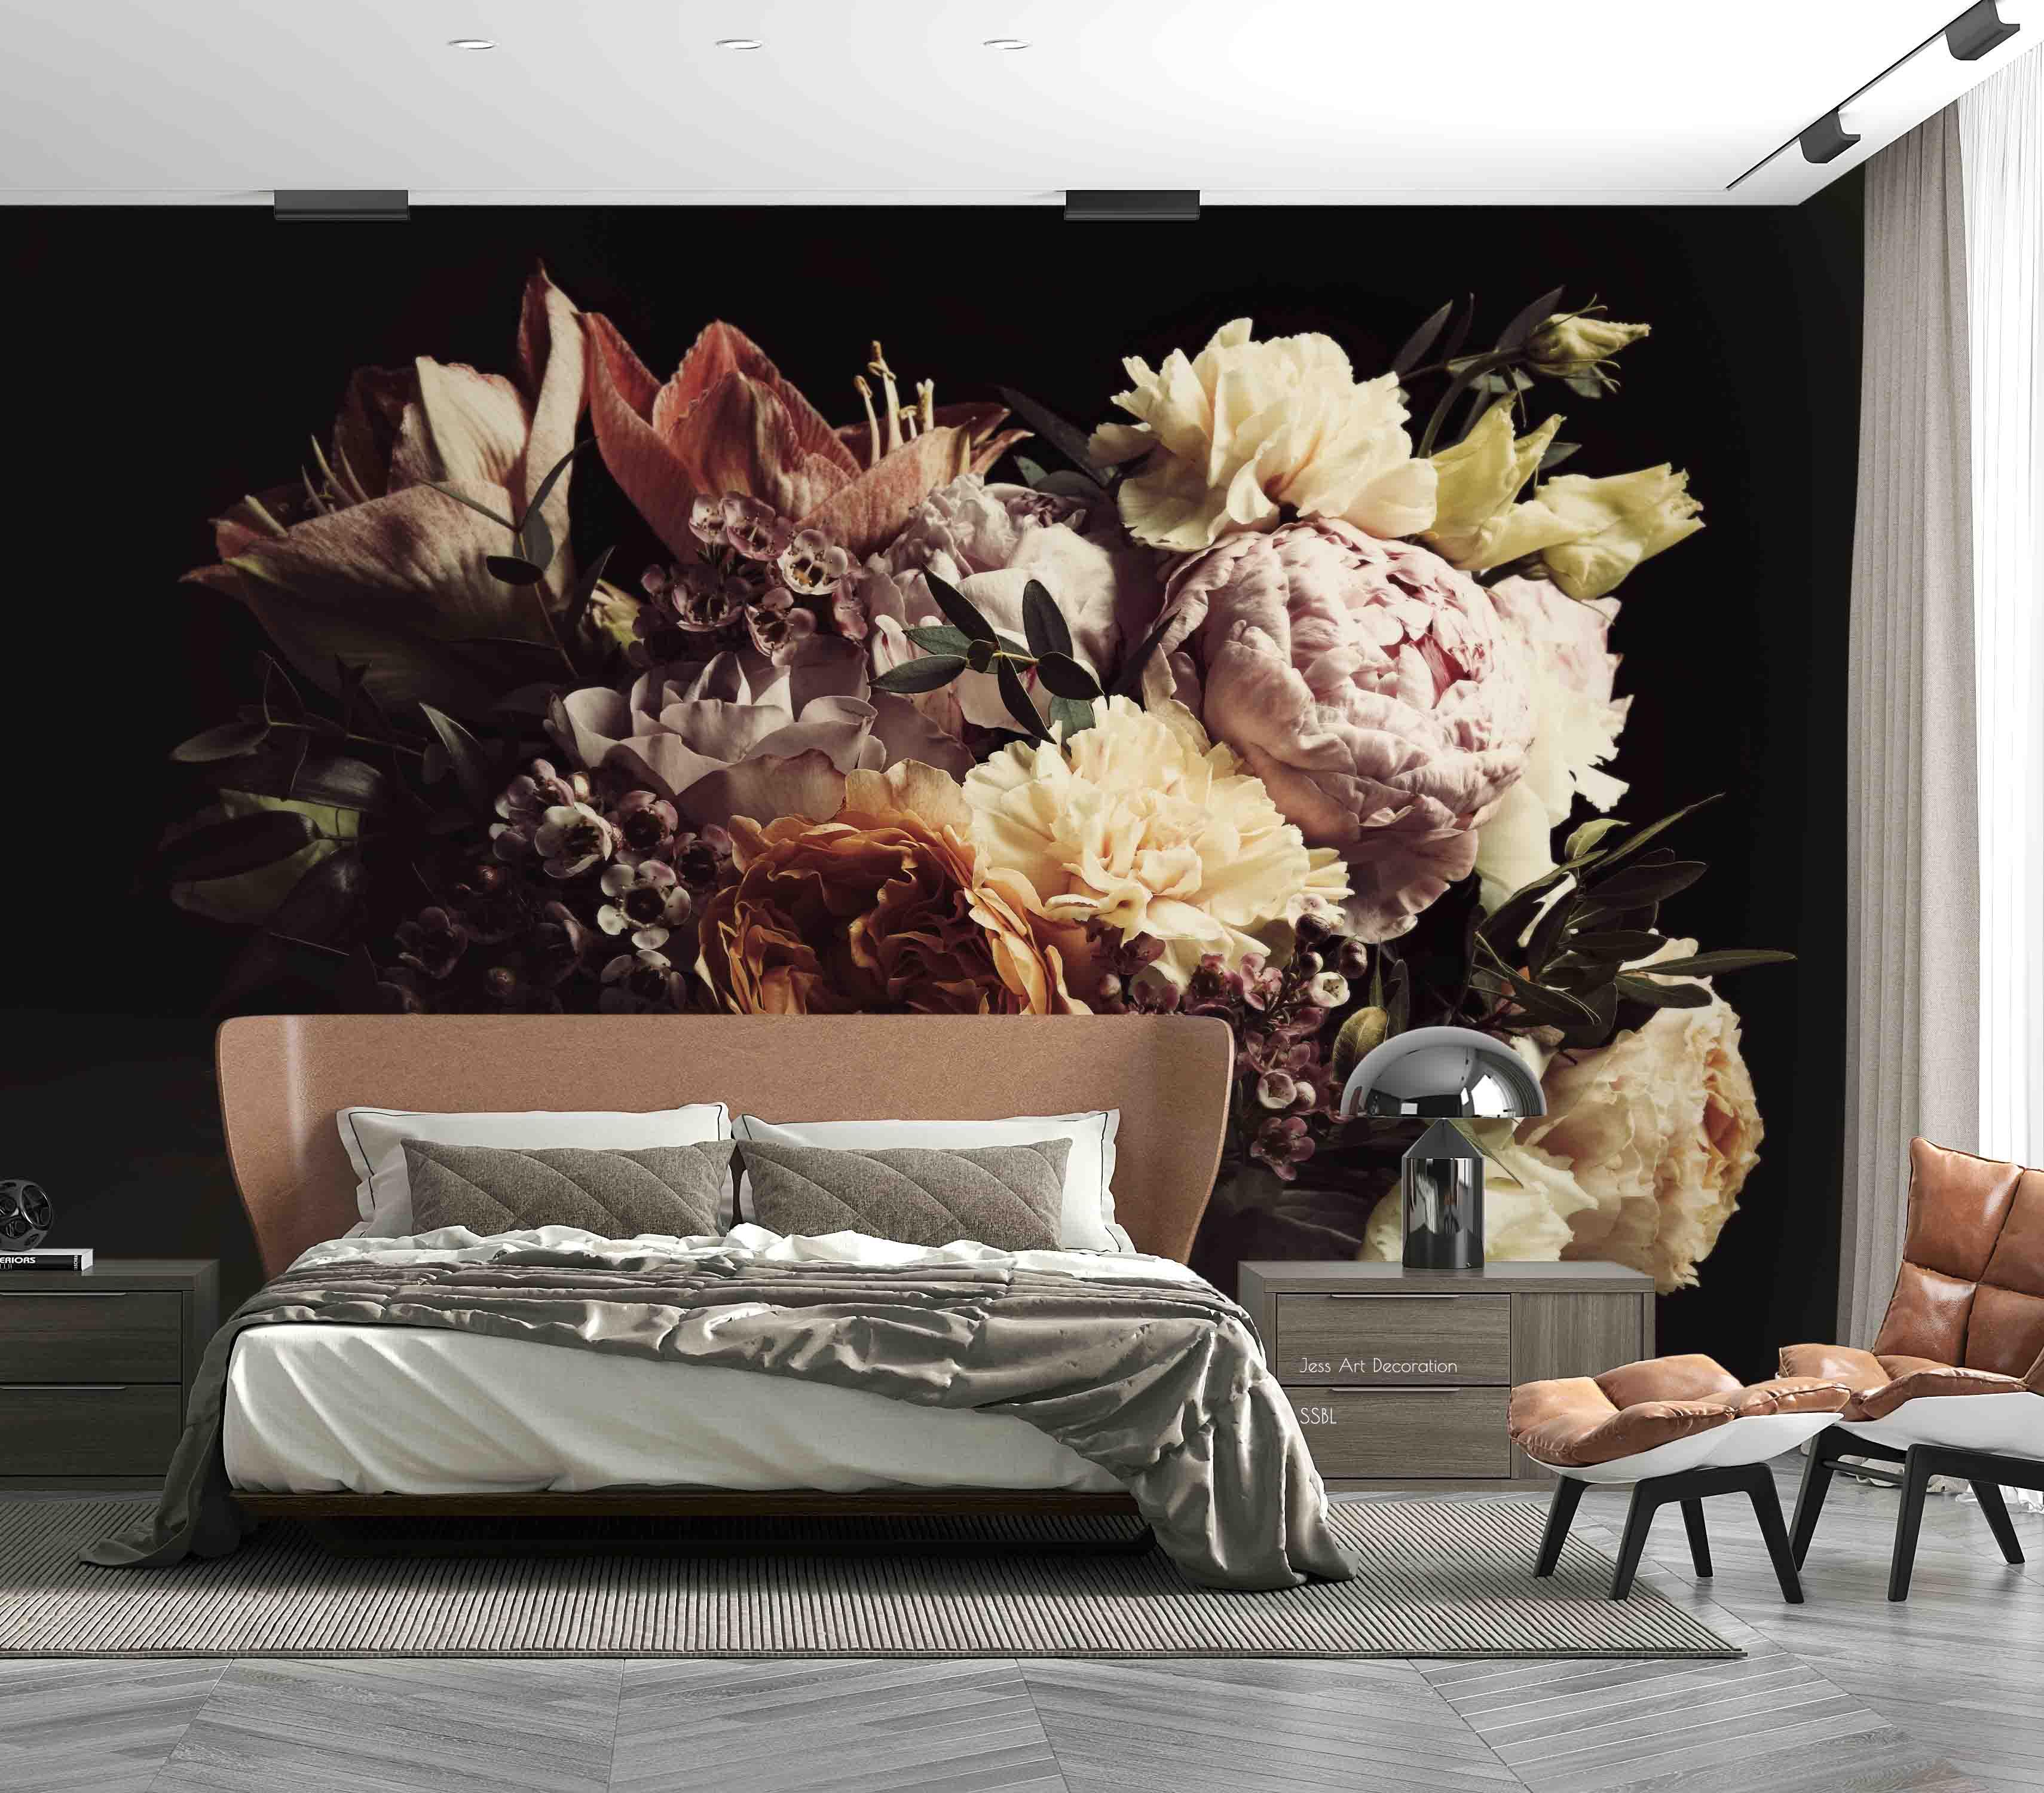 3D Vintage Blooming Flowers Black Background Wall Mural Wallpaper GD 3549- Jess Art Decoration